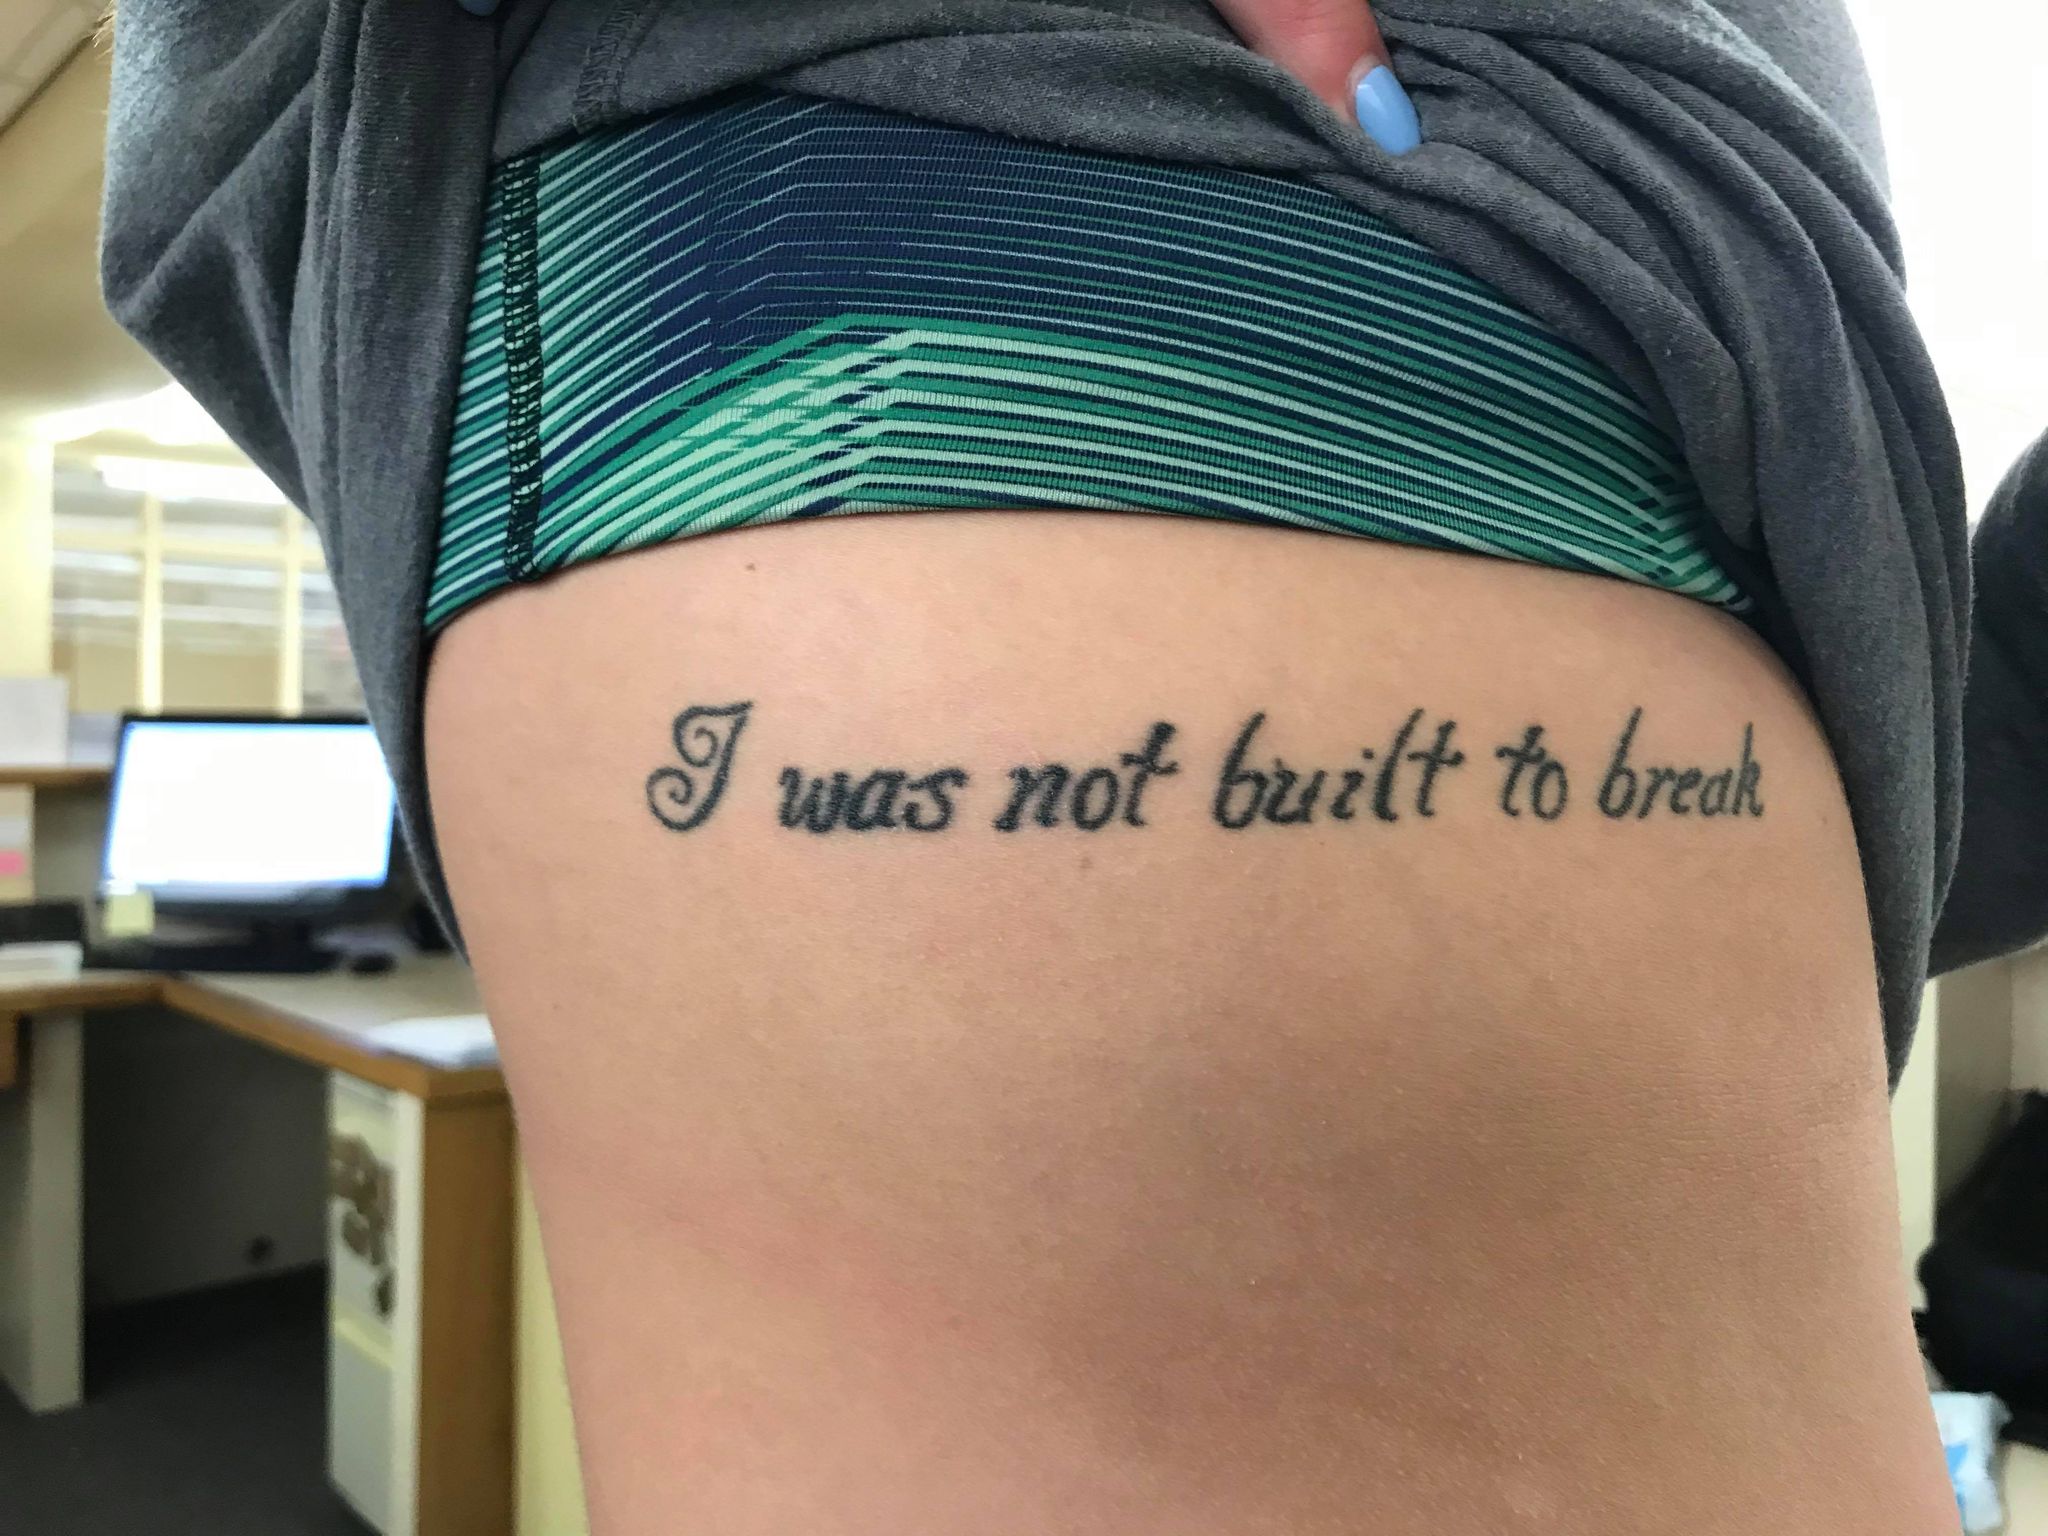 CASA NARDI - Tattoo house - Inspiration quote tattoo on ribs  #casanarditattoohouse #inspiration #quote #quotes #mensfashion #mens #ribs # tattoos #tattoo #ink | Facebook